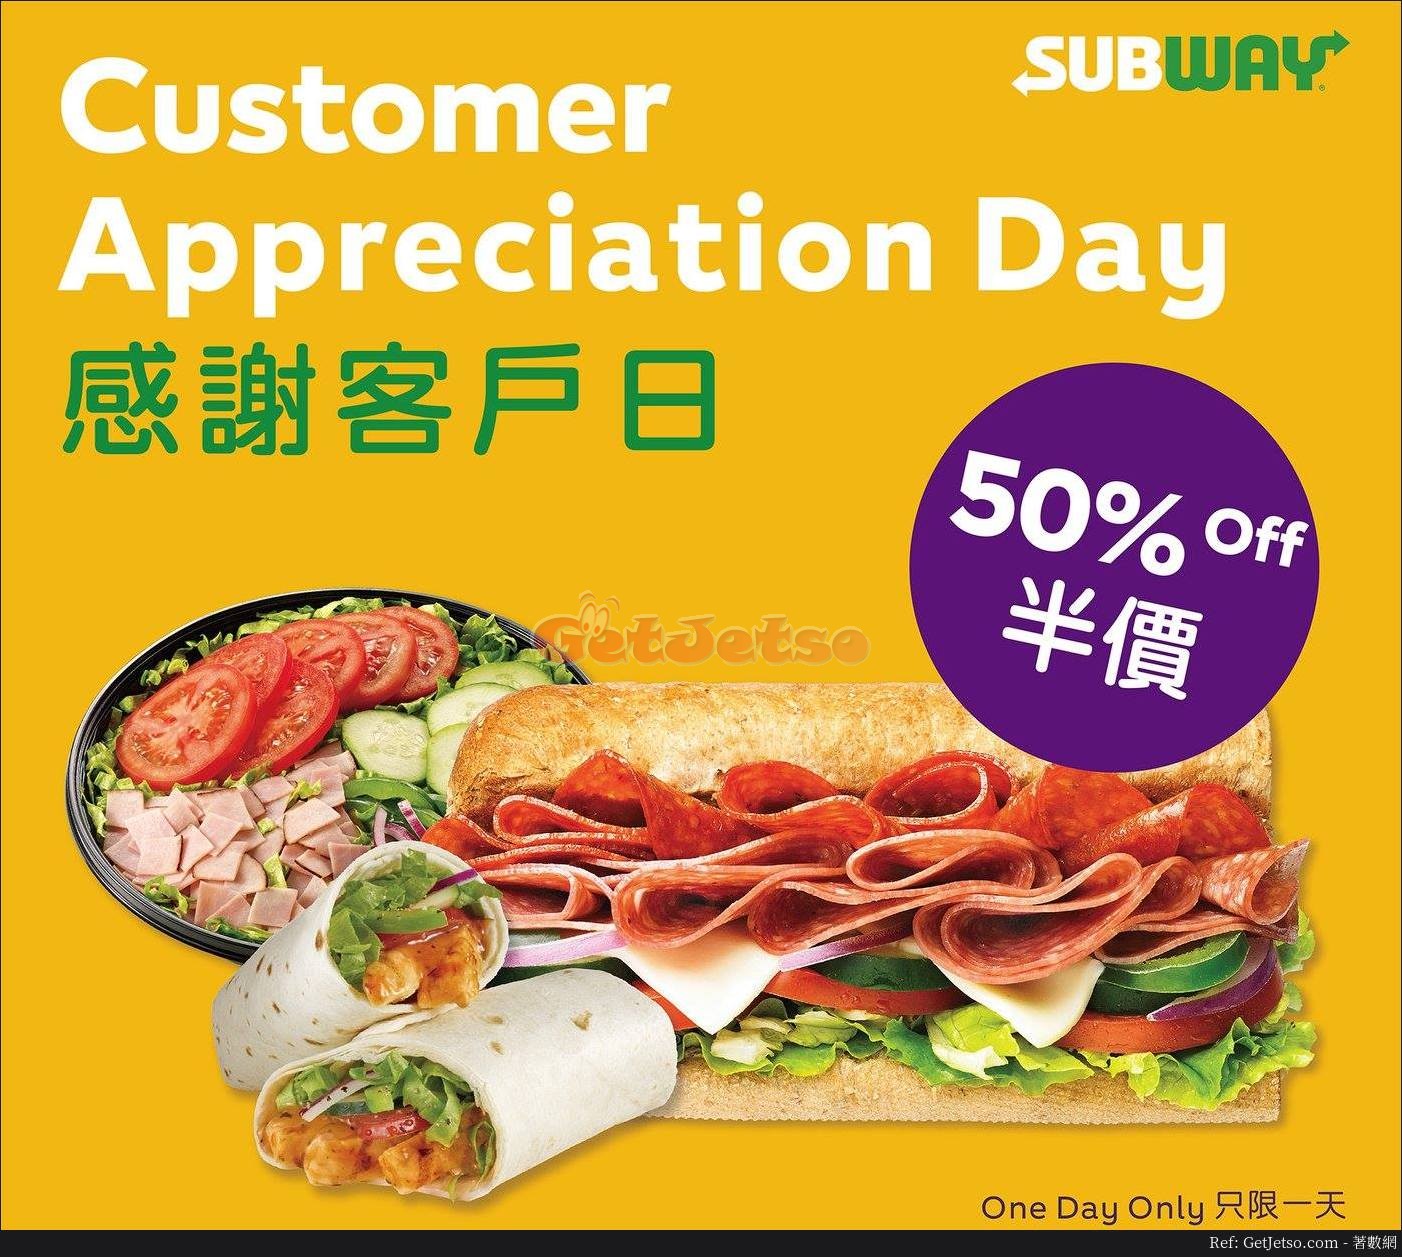 Subway 半價感謝客戶日優惠@觀塘店(至18年8月15日)圖片1